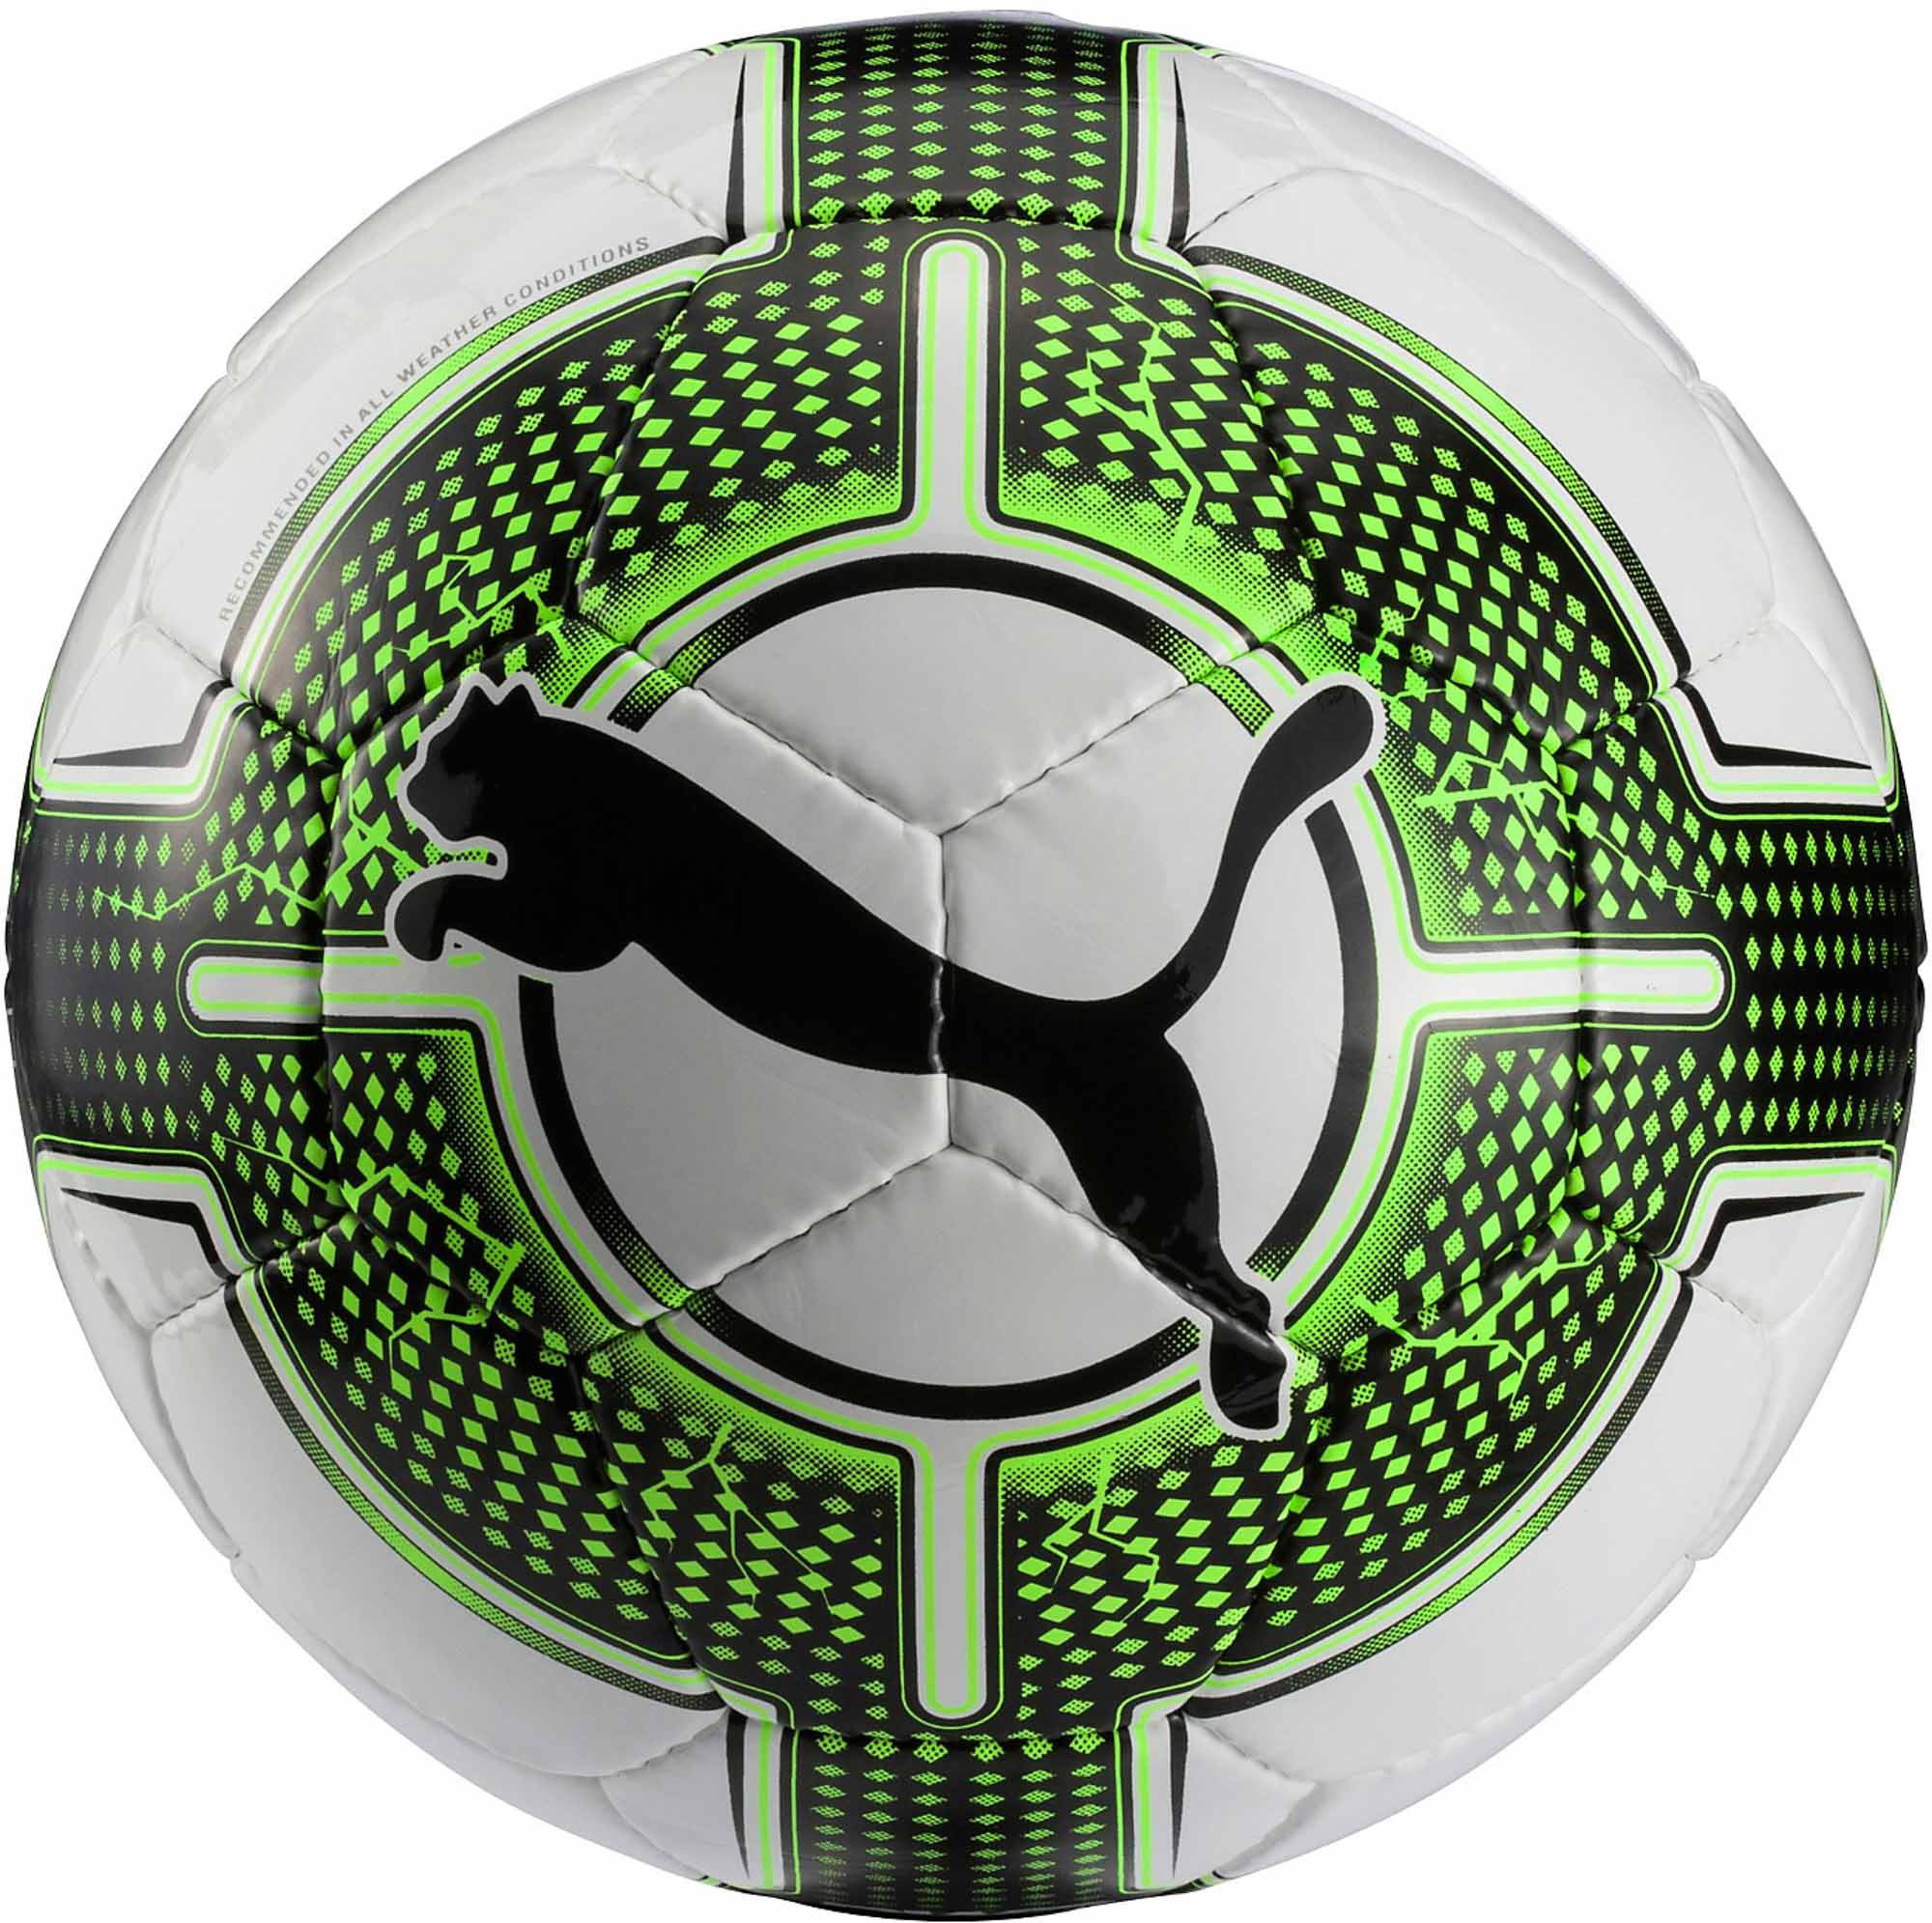 Puma evoPOWER 5.3 Futsal Ball - Green 